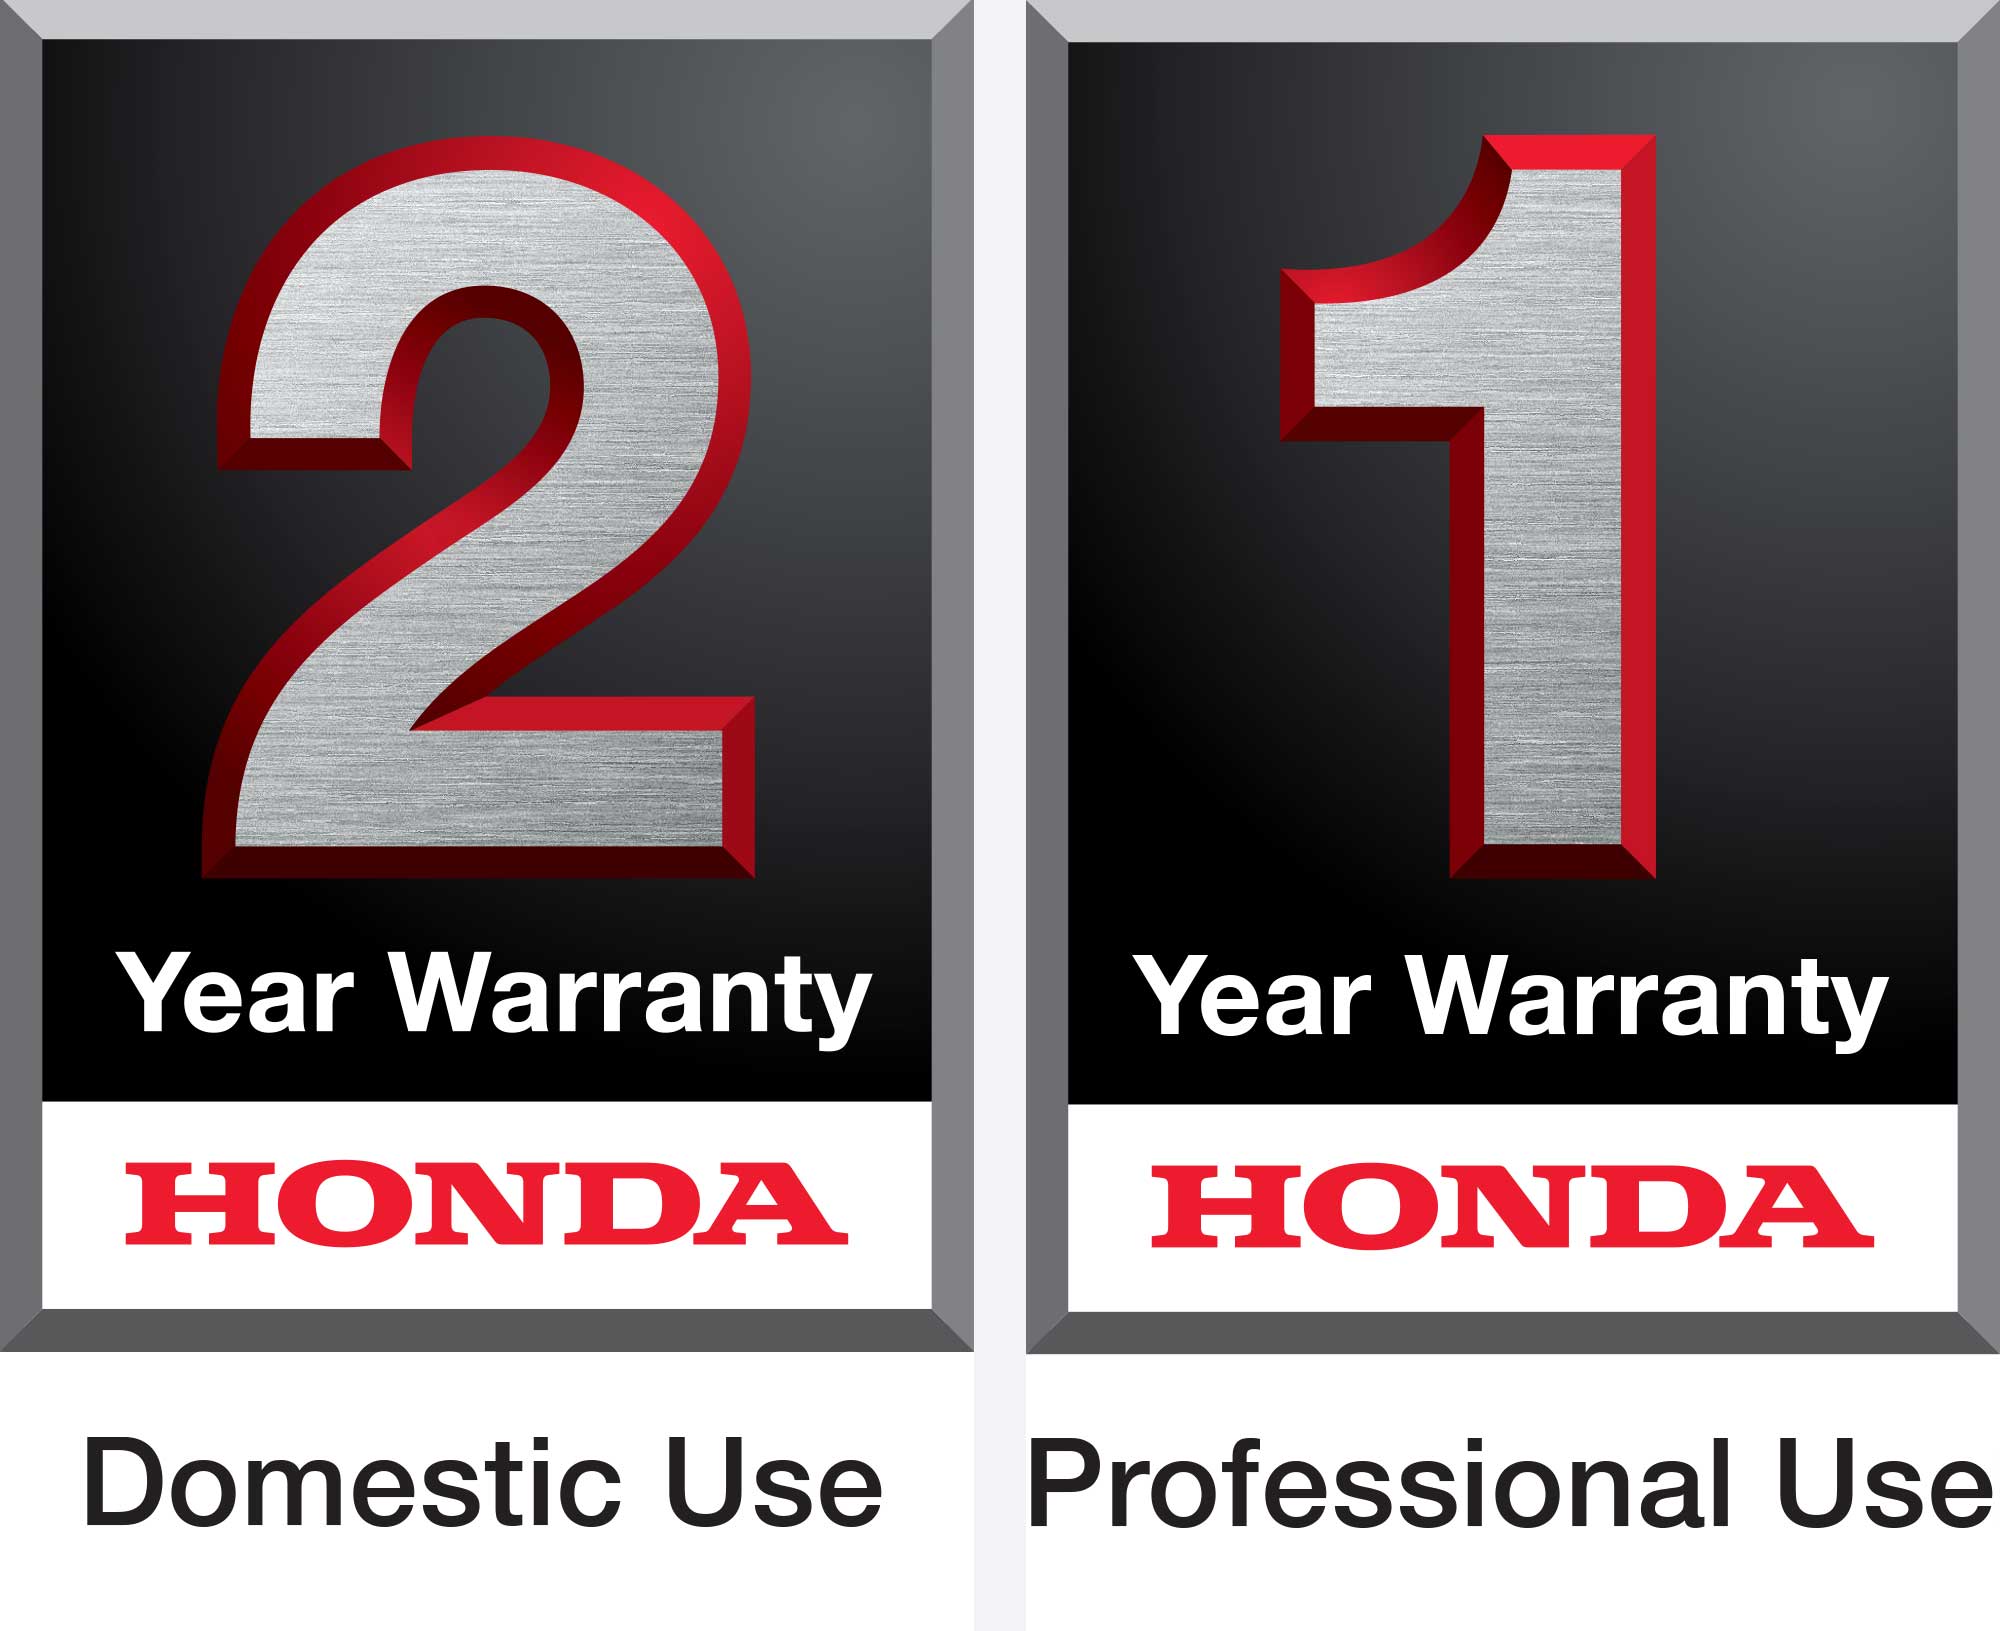 2 year warranty. Honda. Domestic Use. 1 year warrant. Honda. Professional Use